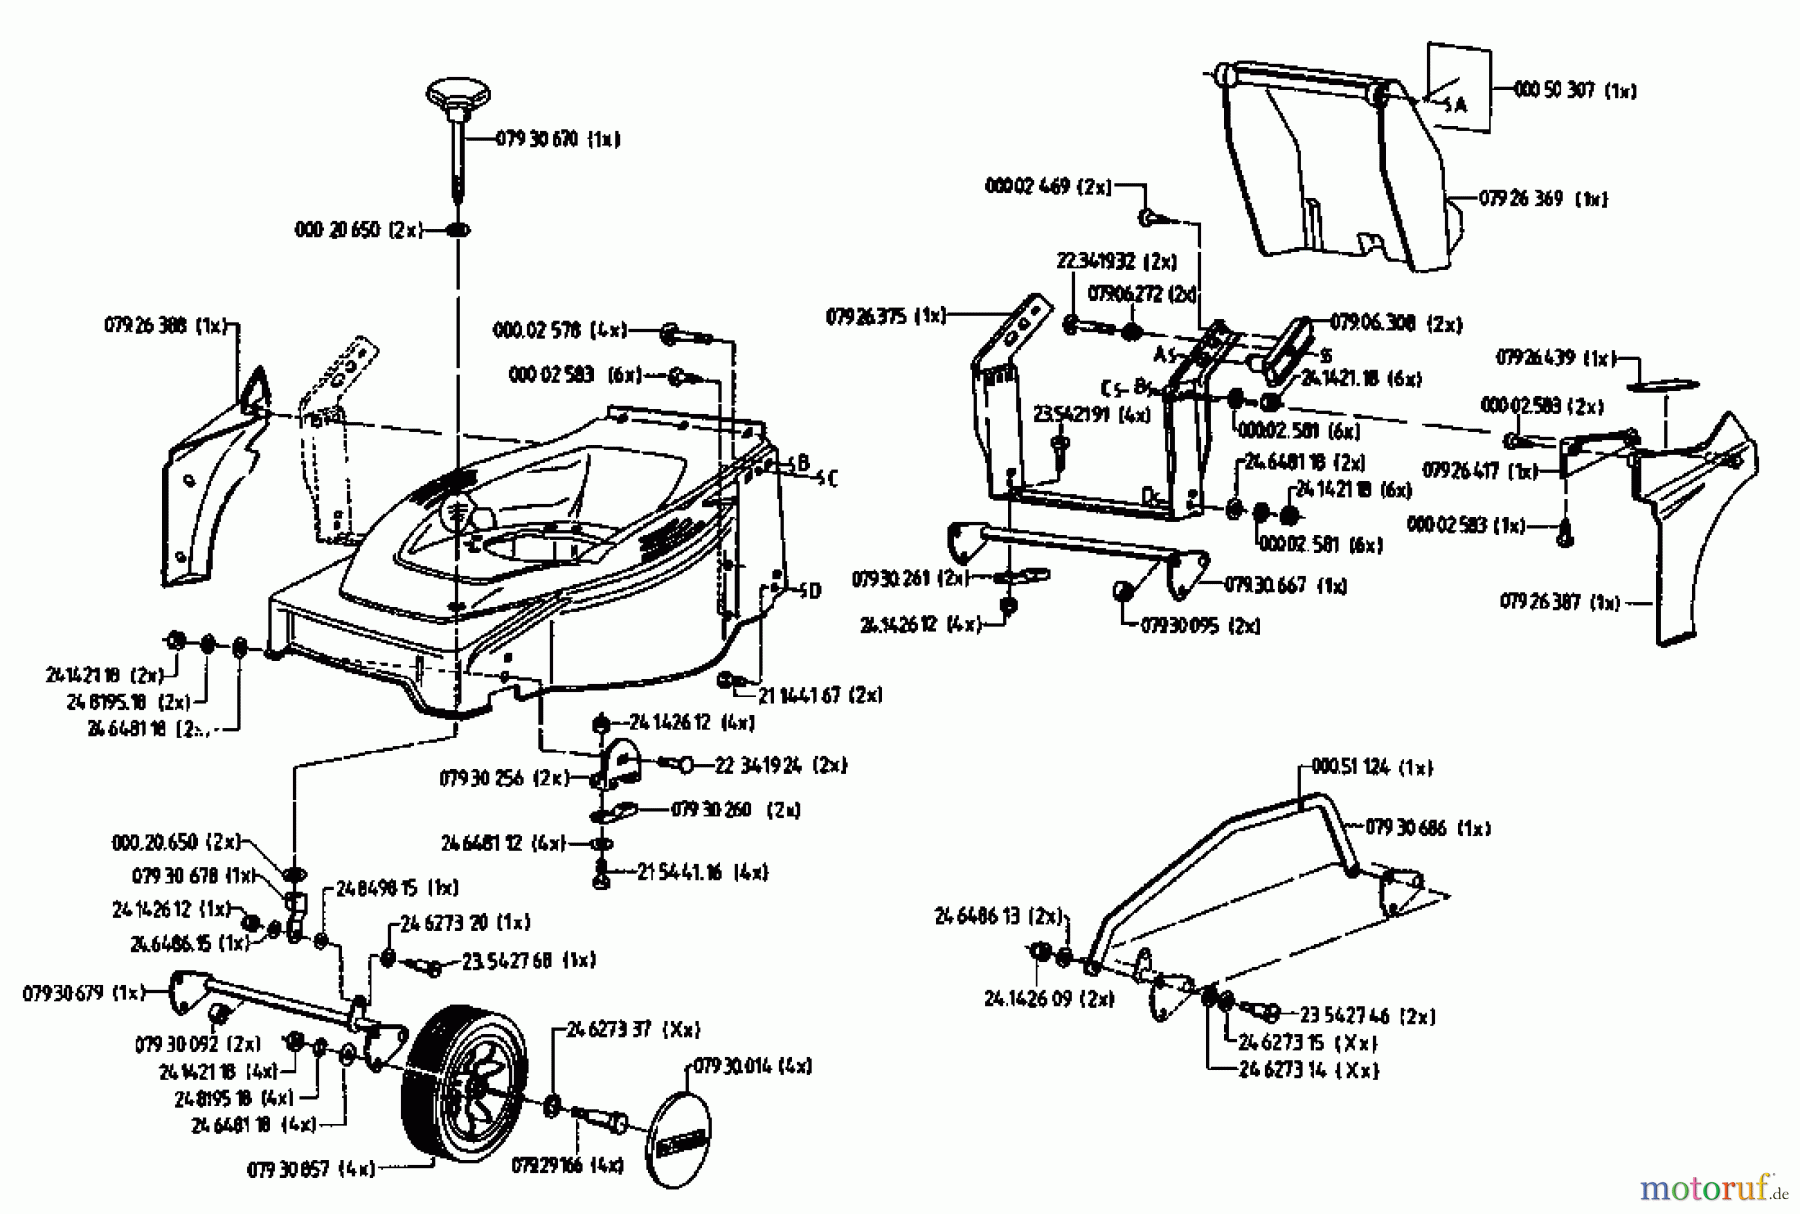  Gutbrod Petrol mower HB 48 L 02814.01  (1994) Basic machine